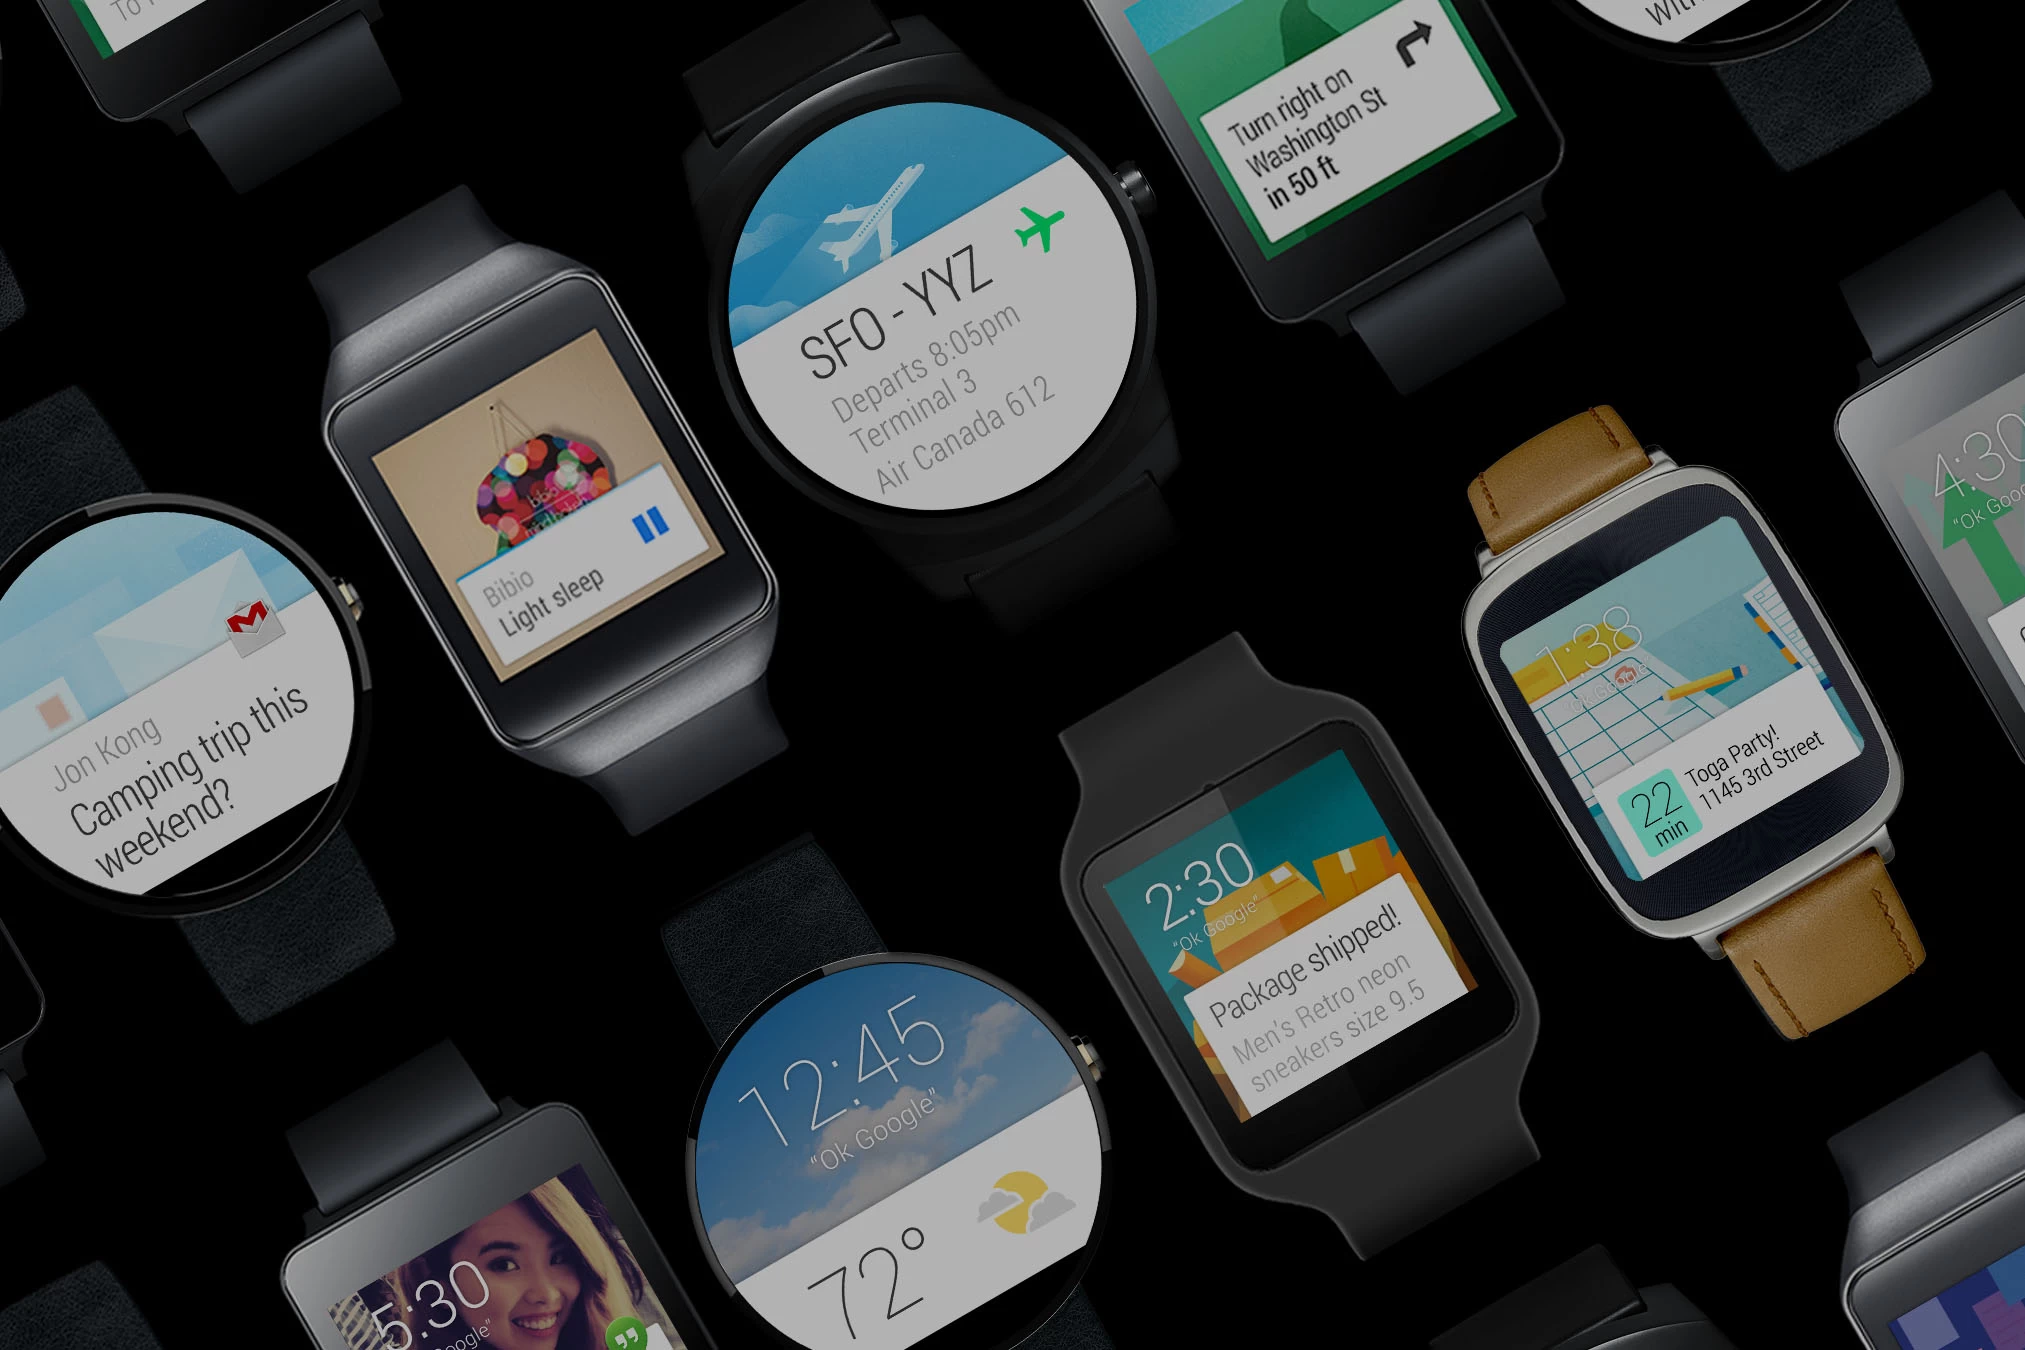 android wear collection | wearable-news | Google ประกาศอัพเดท Android Wear เวอร์ชั่น 1.4 รองรับการโทรศัพท์ผ่านนาฬิกาและเพิ่มตัวเลือกภาษาเพิ่มเติมรวมทั้ง ภาษาไทย